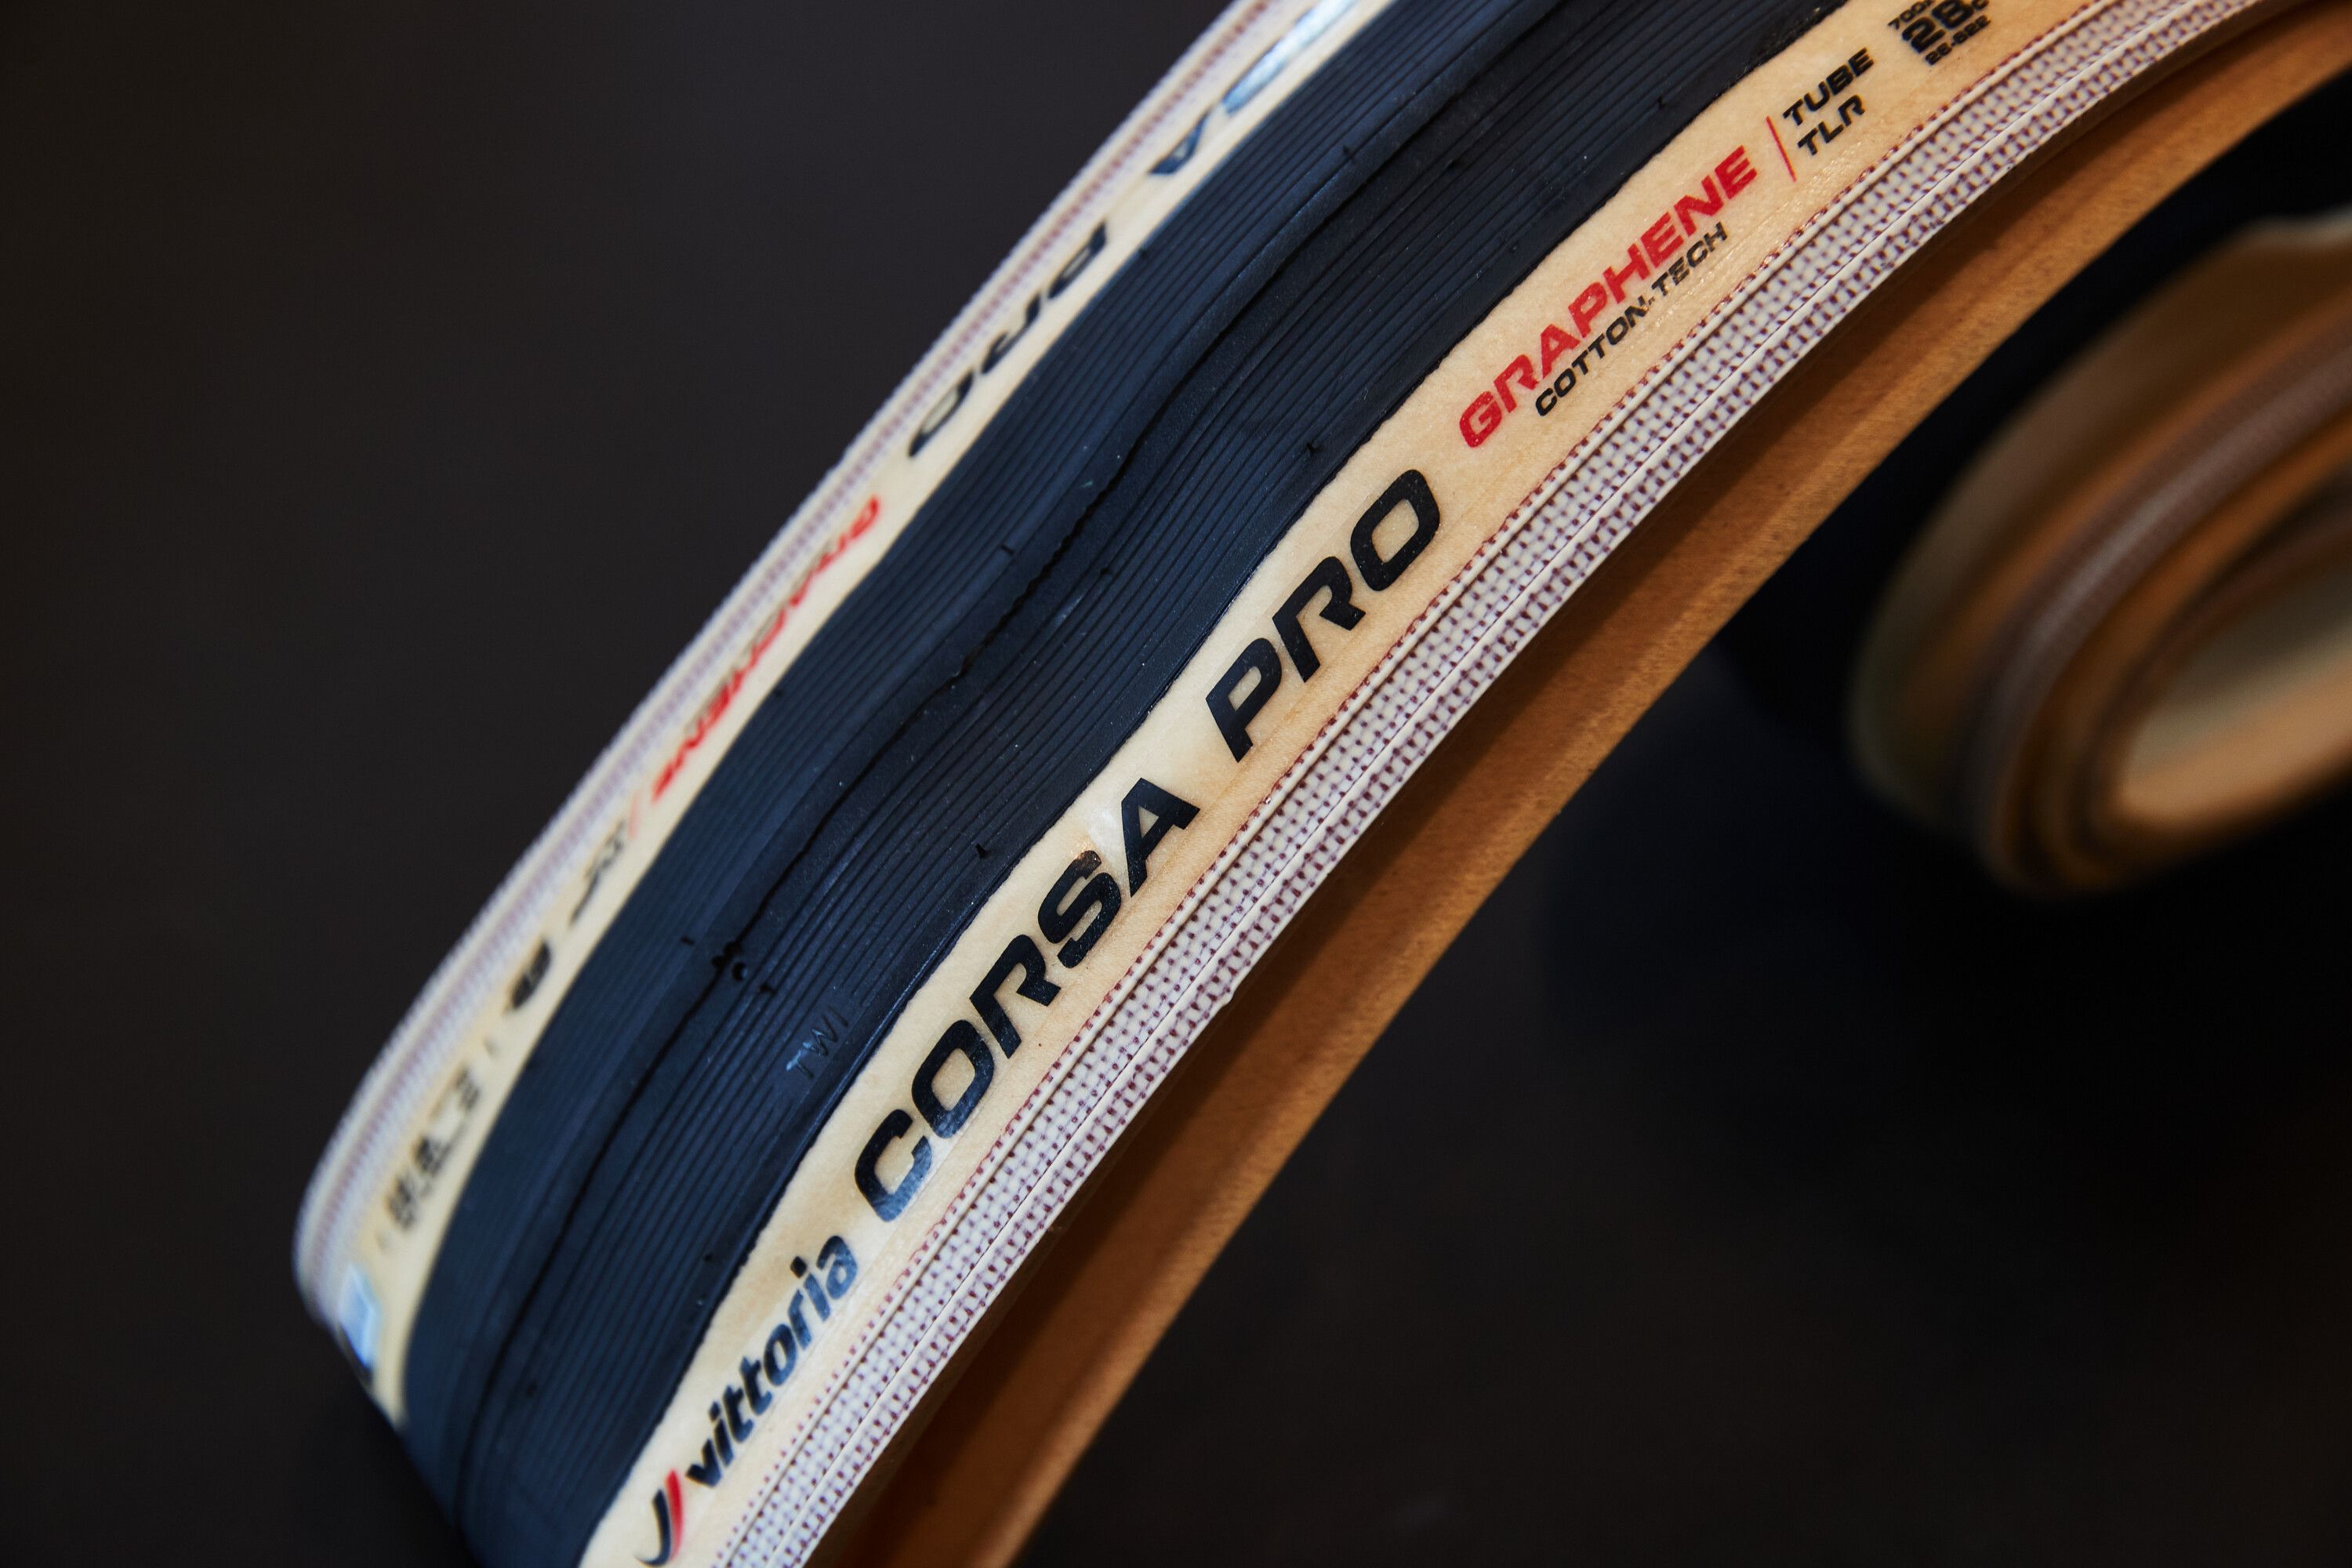 Vittoria Corsa Pro & Corsa Pro Control Reviewed | Best Road Tires